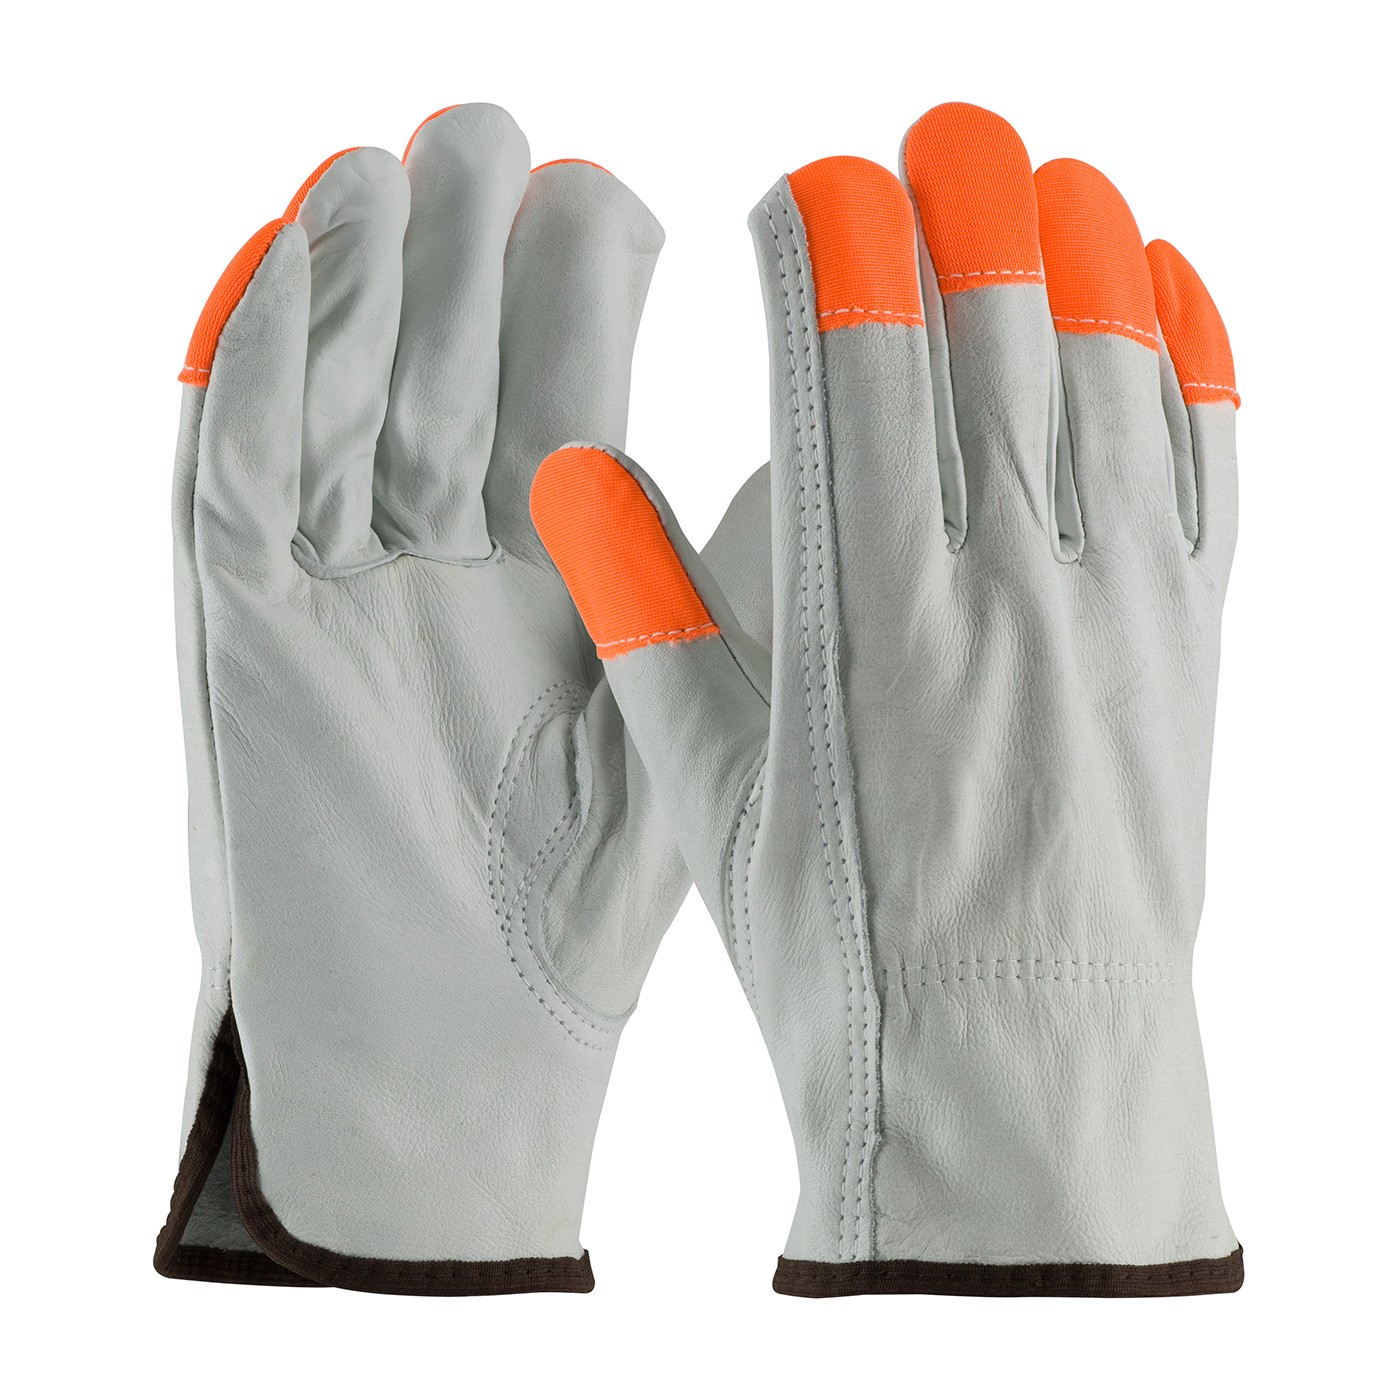  PIP® Regular Grade Top Grain Cowhide Leather Drivers Glove with Hi-Vis Fingertips - Keystone Thumb  (#68-163HV)